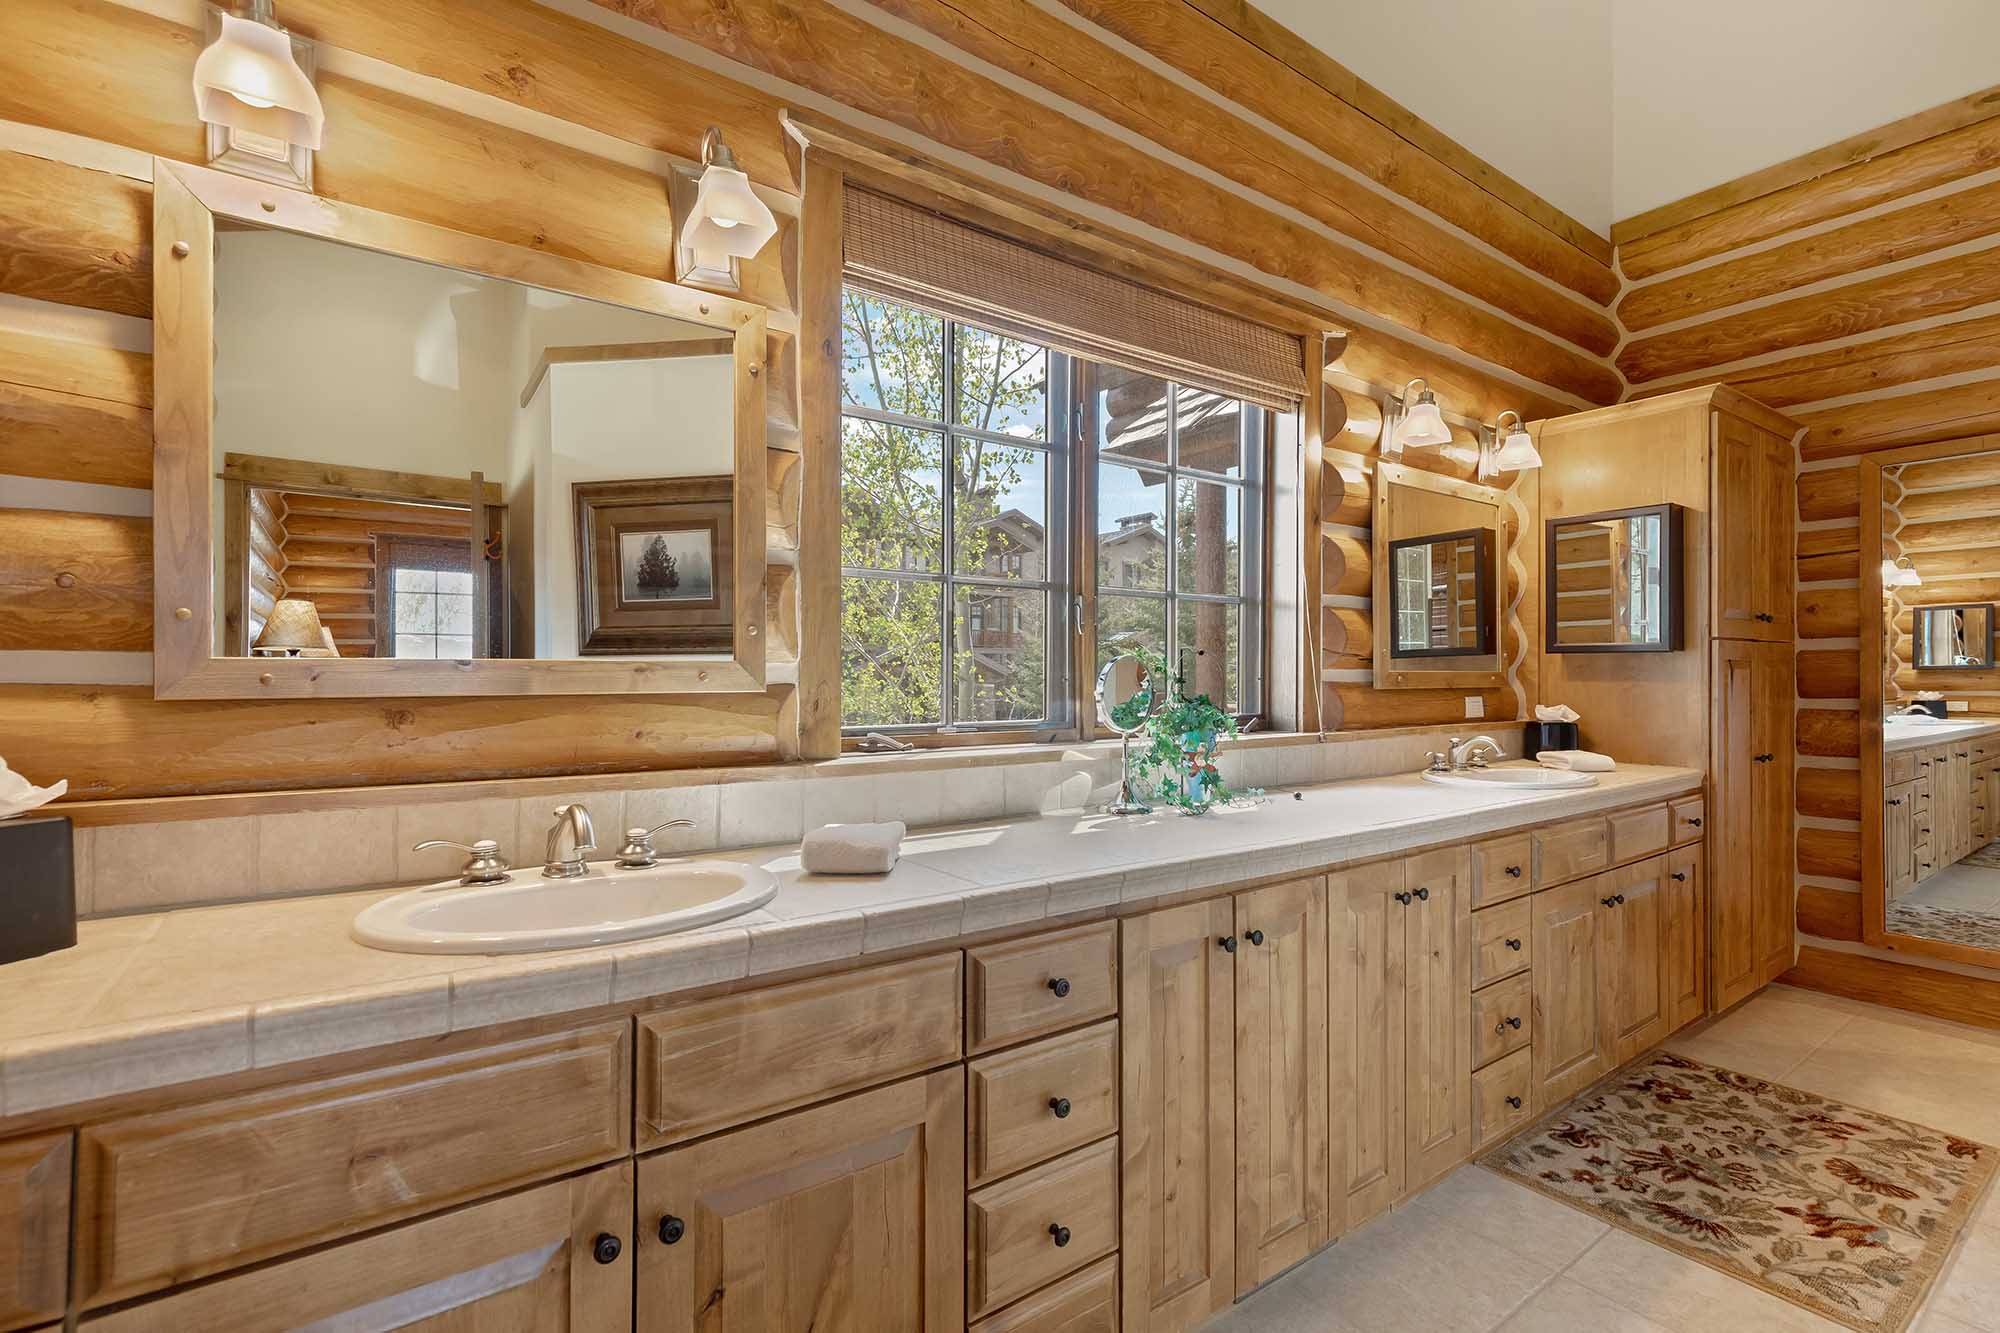 Rymell Log Cabin - 4 Bedroom - Teton Springs